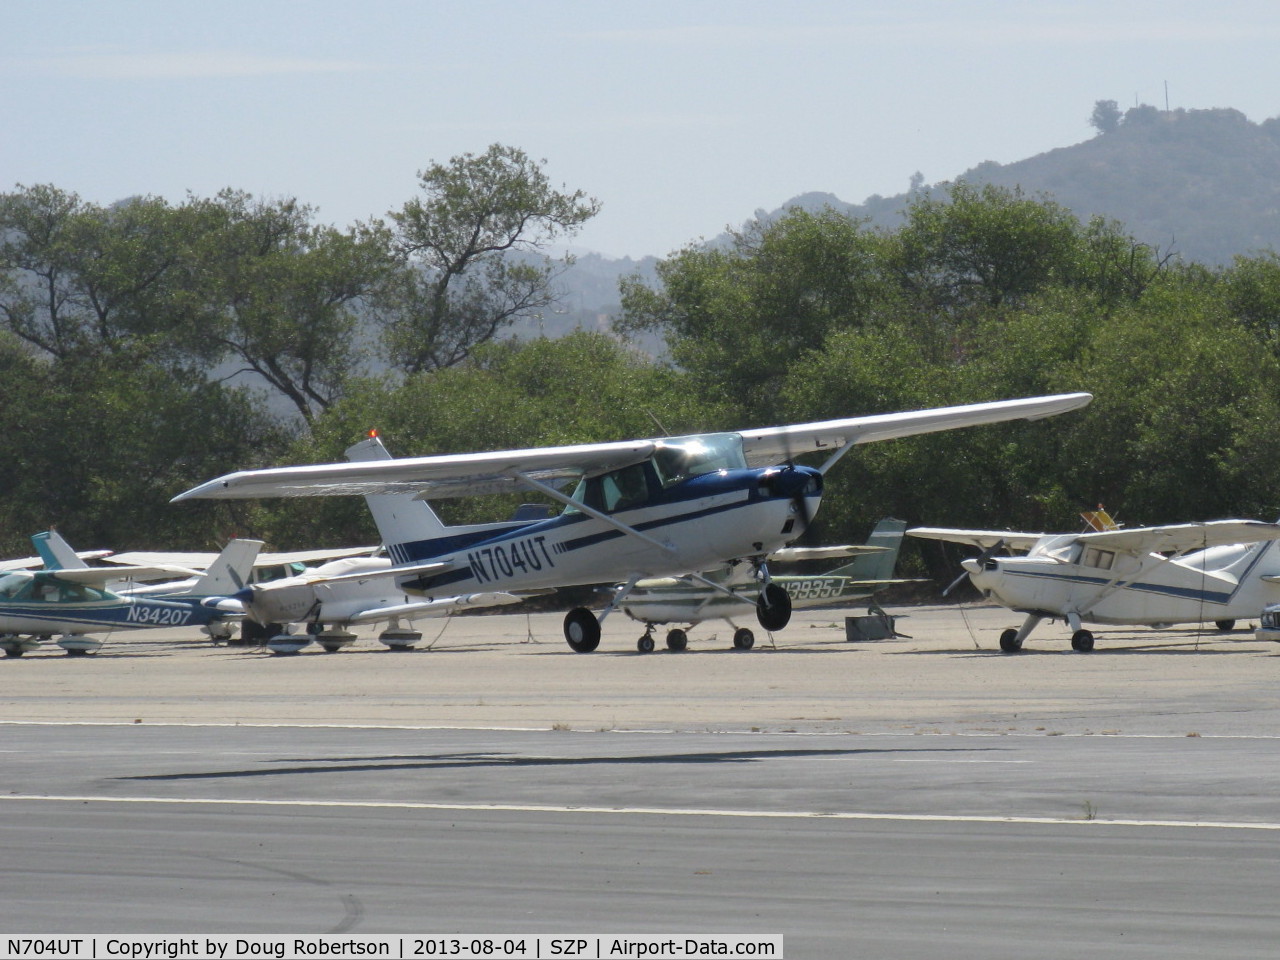 N704UT, 1976 Cessna 150M C/N 15078891, 1976 Cessna 150M, Continental O-200 100 Hp, another takeoff climb Rwy 22